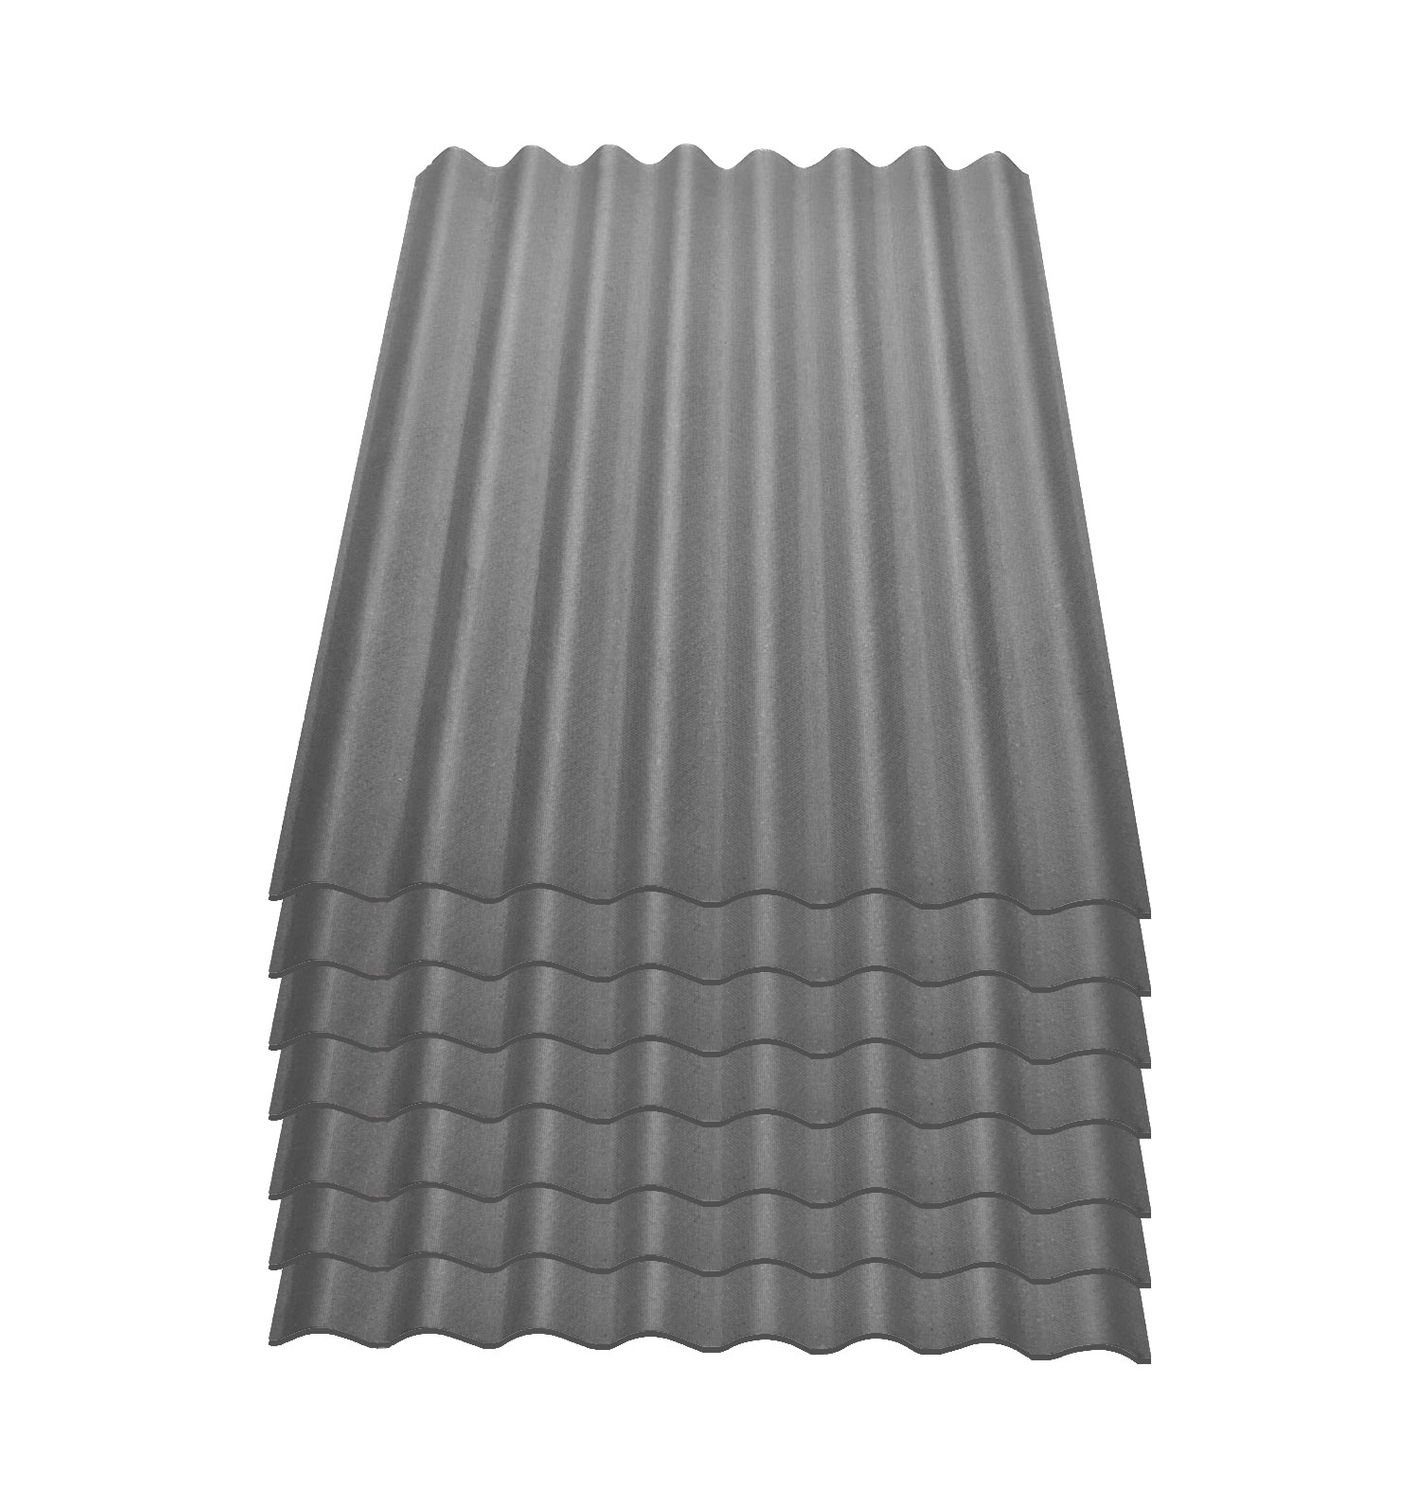 Onduline Dachpappe Onduline Easyline Dachplatte Wandplatte Bitumenwellplatten Wellplatte 7x0,76m² - grau, wellig, 5.32 m² pro Paket, (7-St)